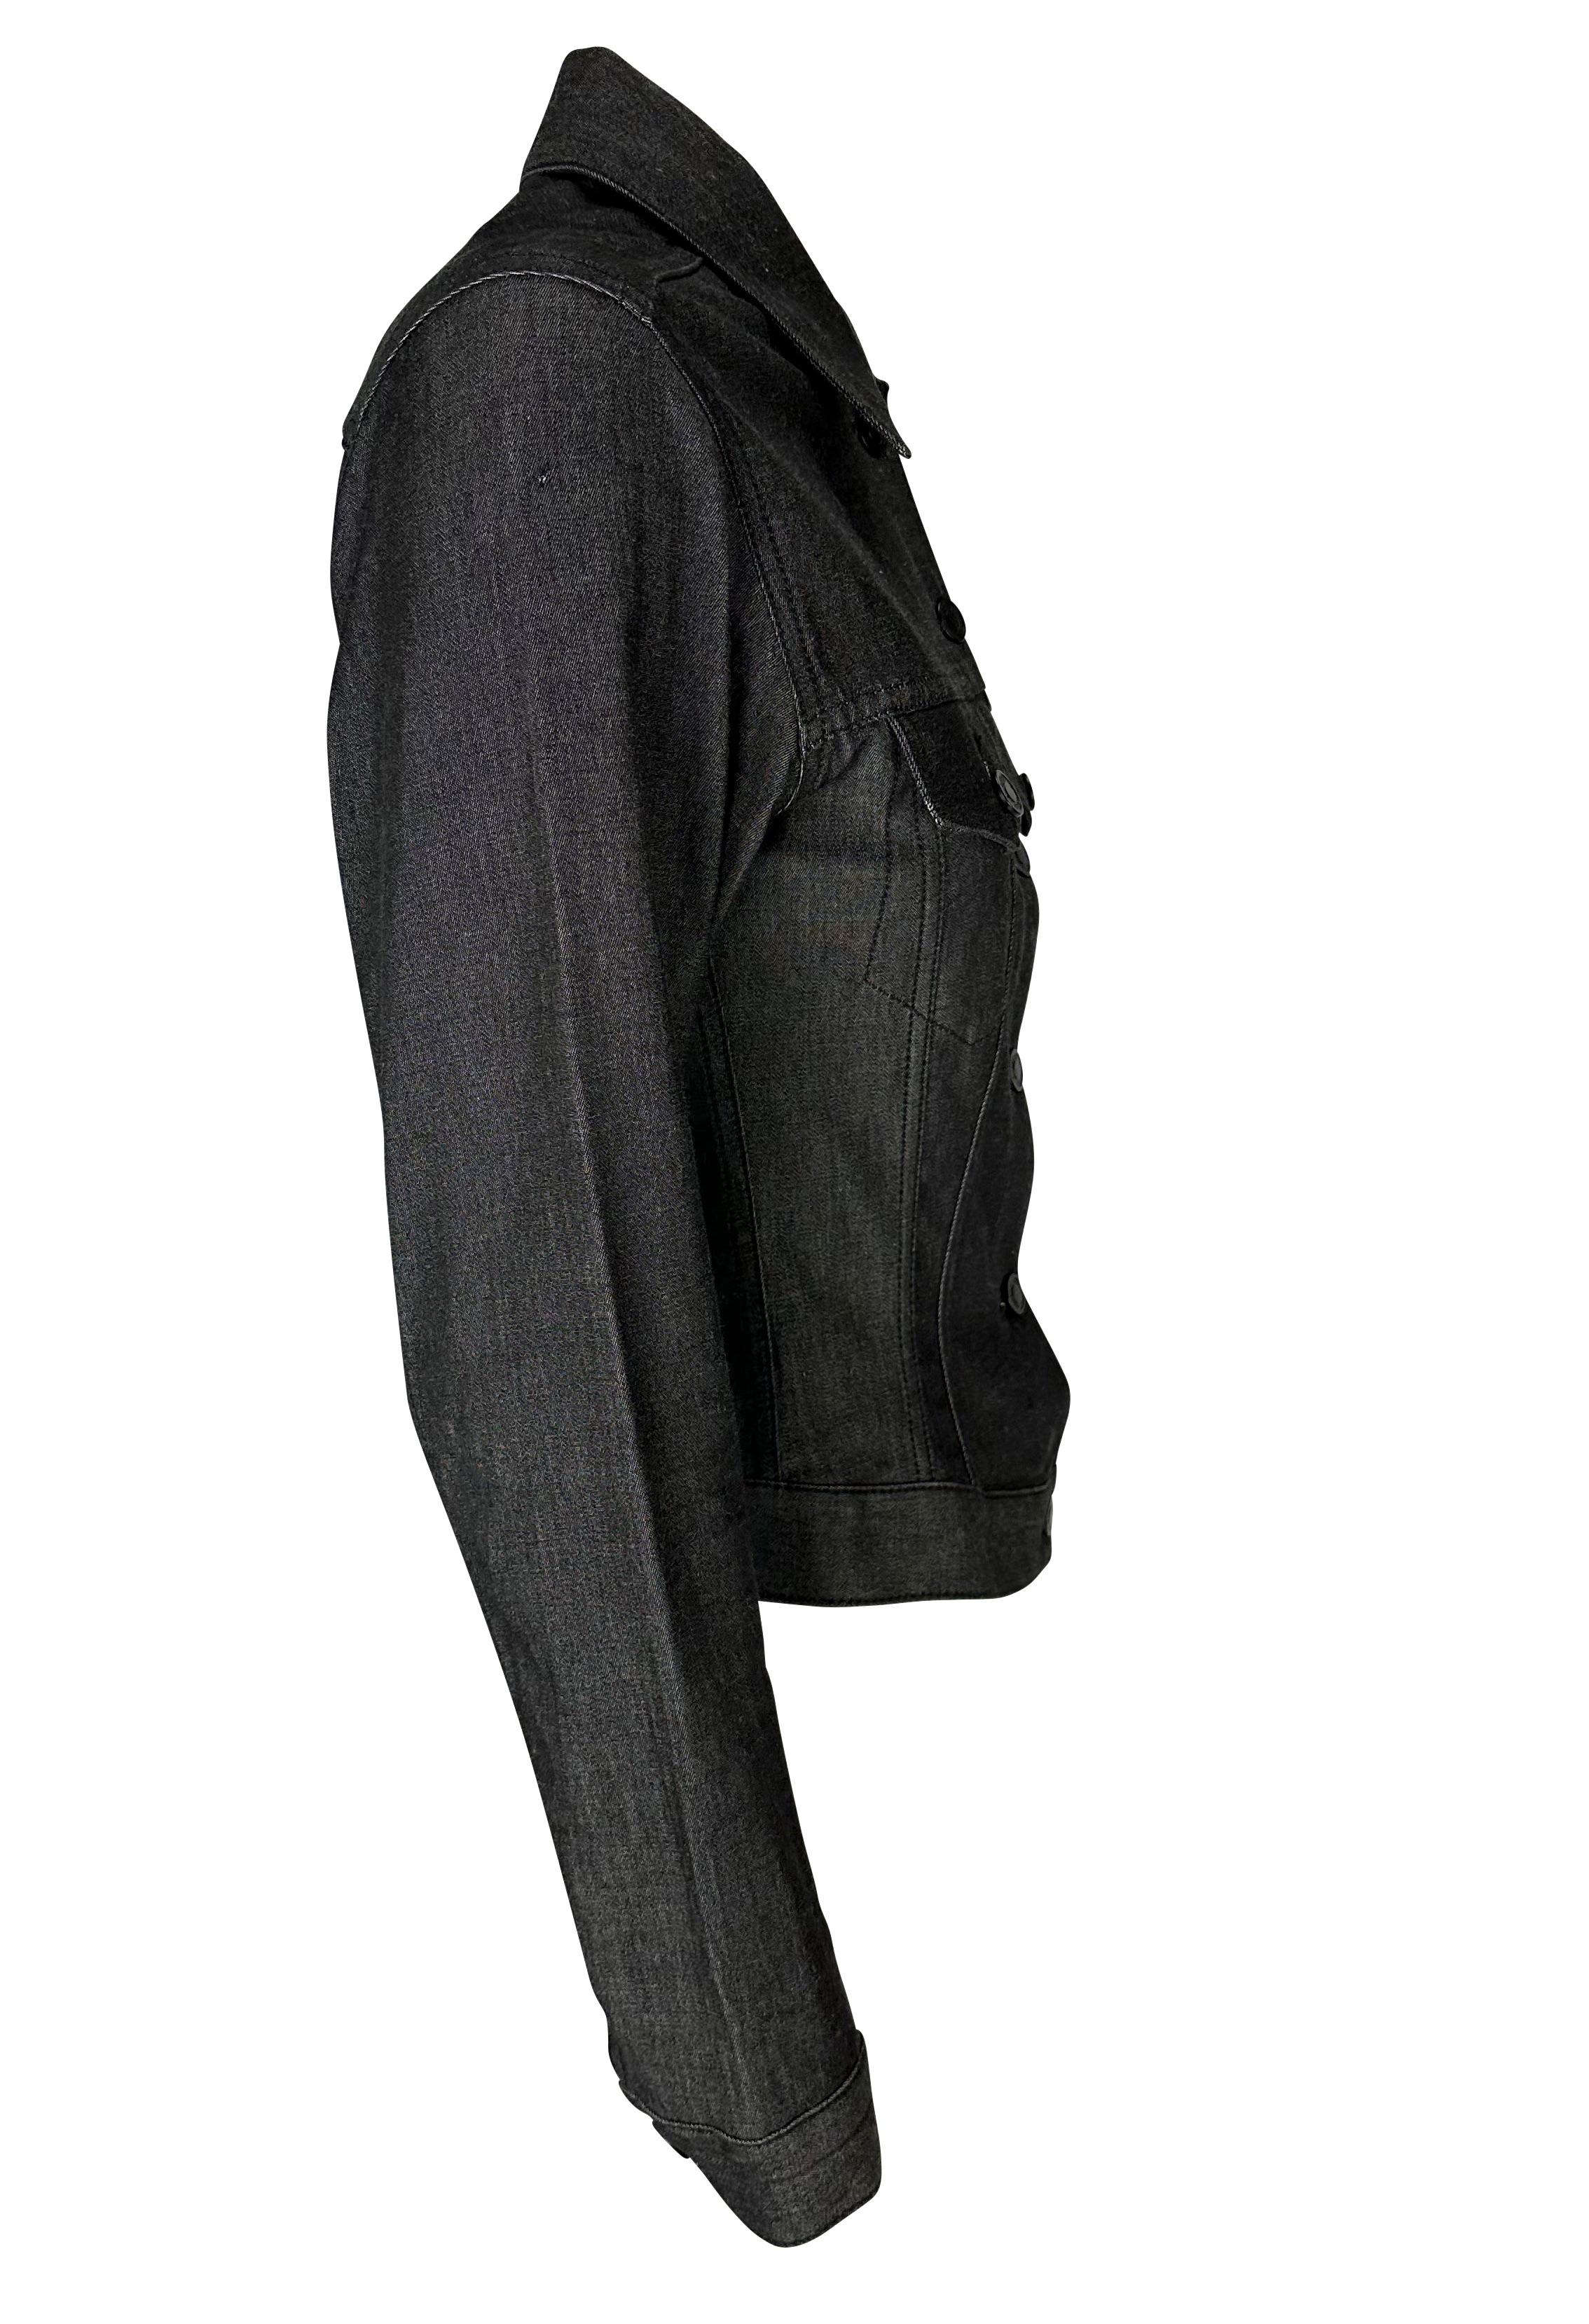 2001 Gucci by Tom Ford Black Stretch Denim Cotton Monochrome Jacket For Sale 2